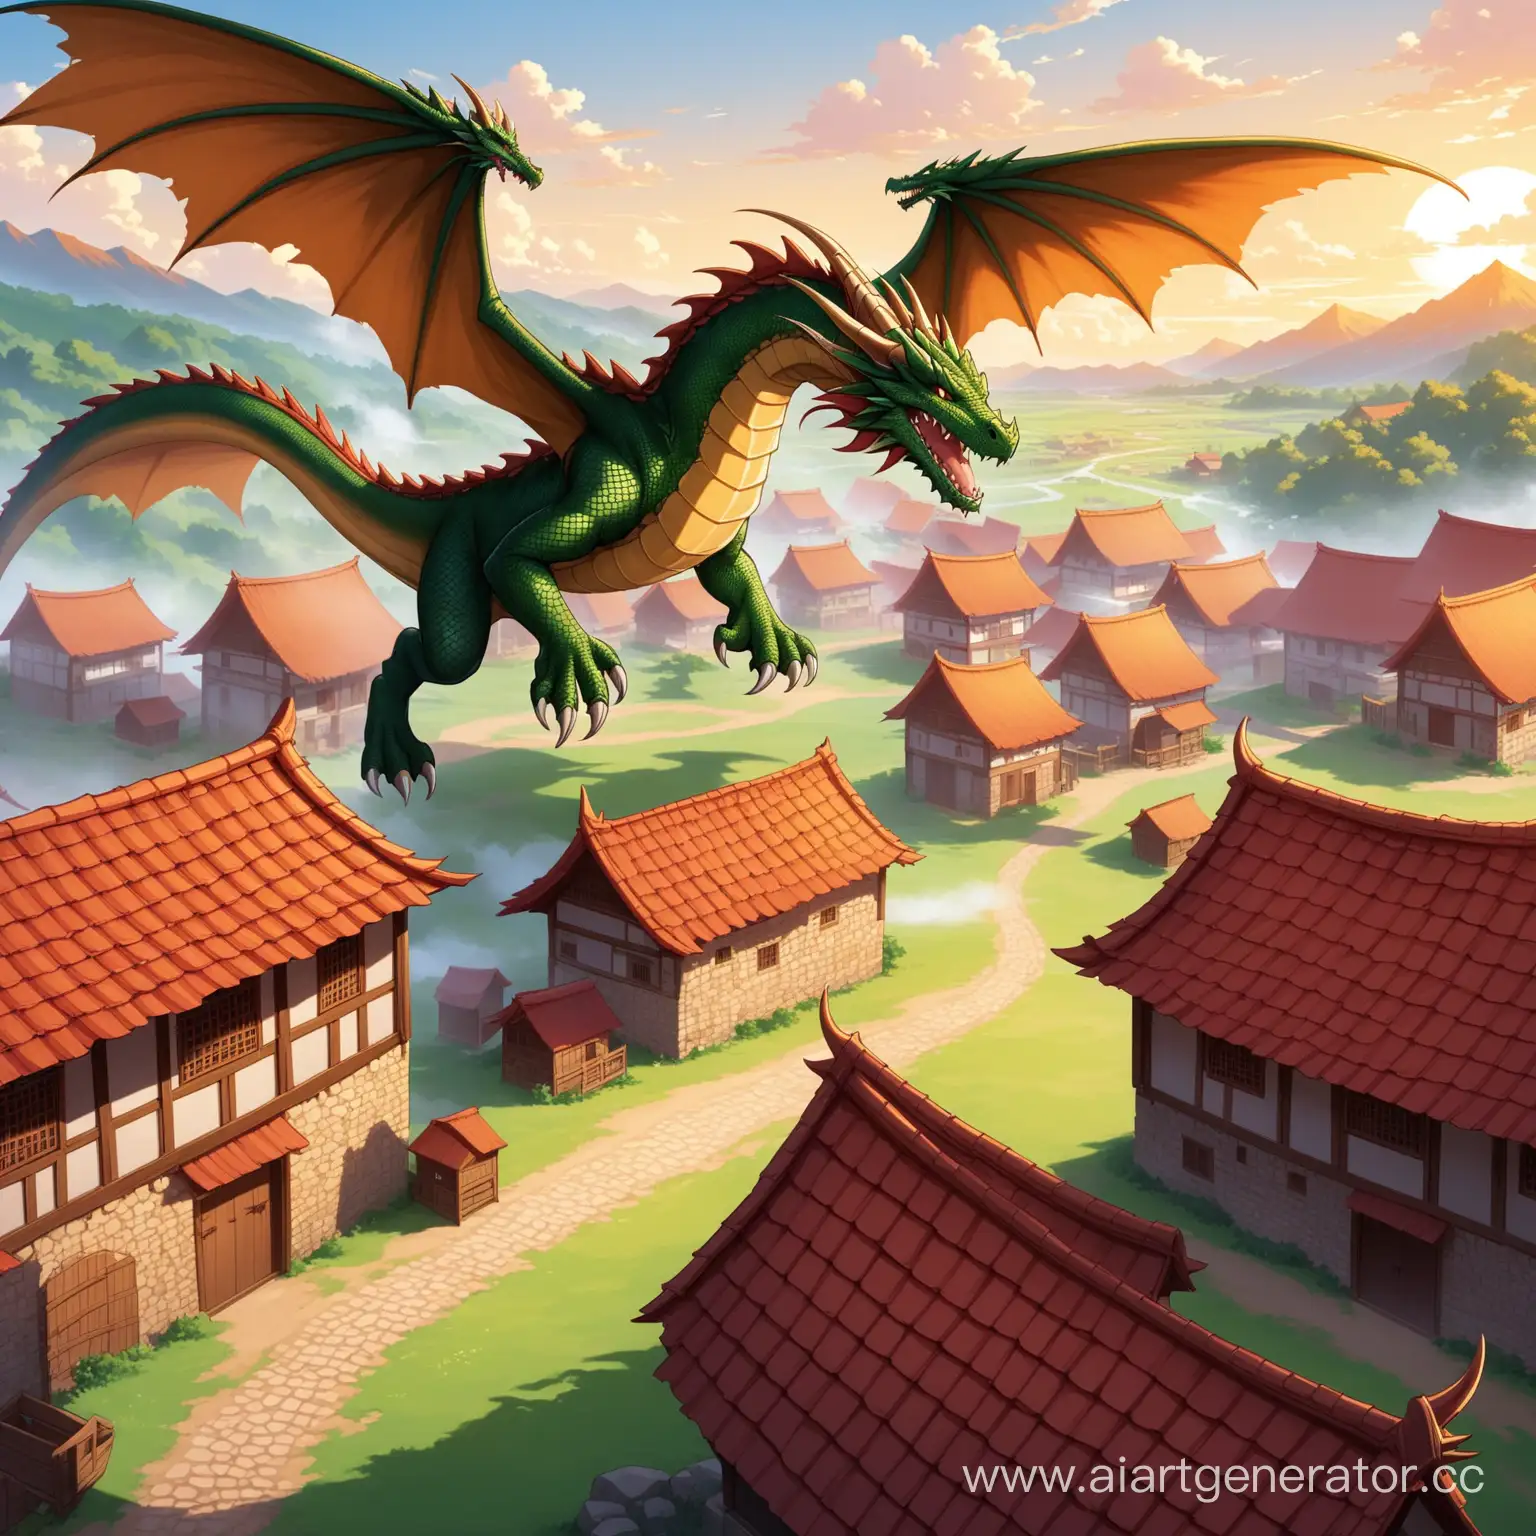 Village-Threatened-by-Fierce-Dragon-Heroic-Standoff-in-Fantasy-Landscape